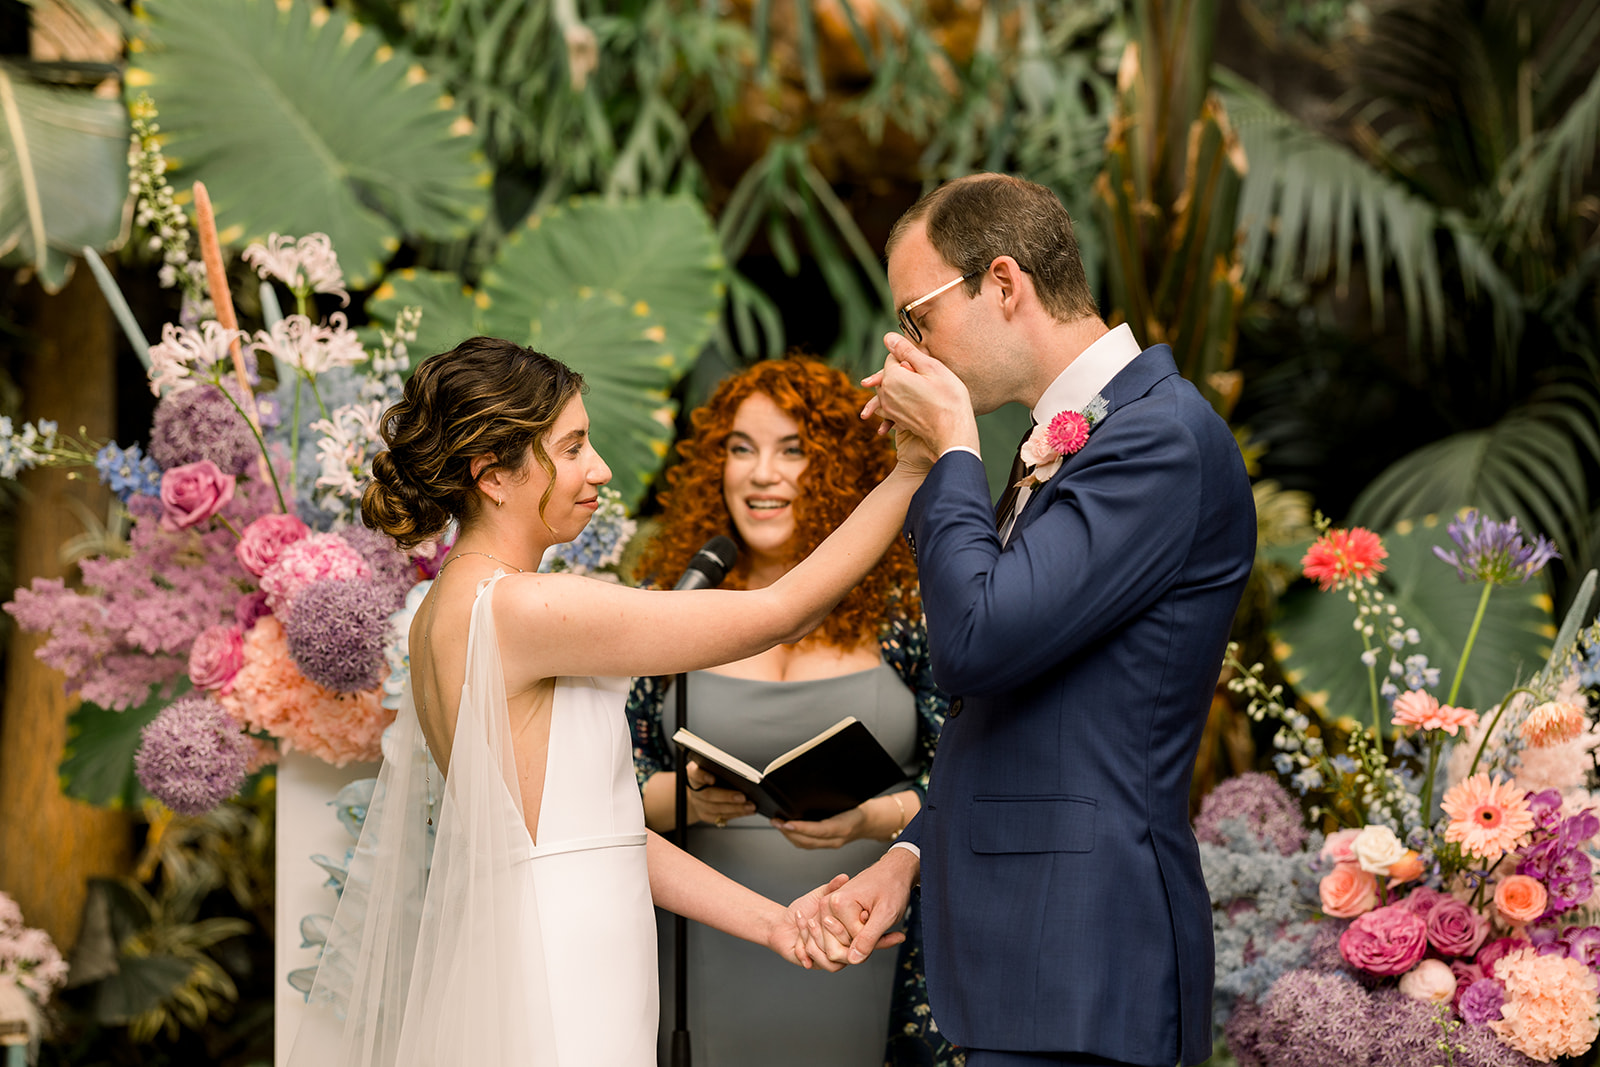 Groom kisses brides hand during wedding ceremony